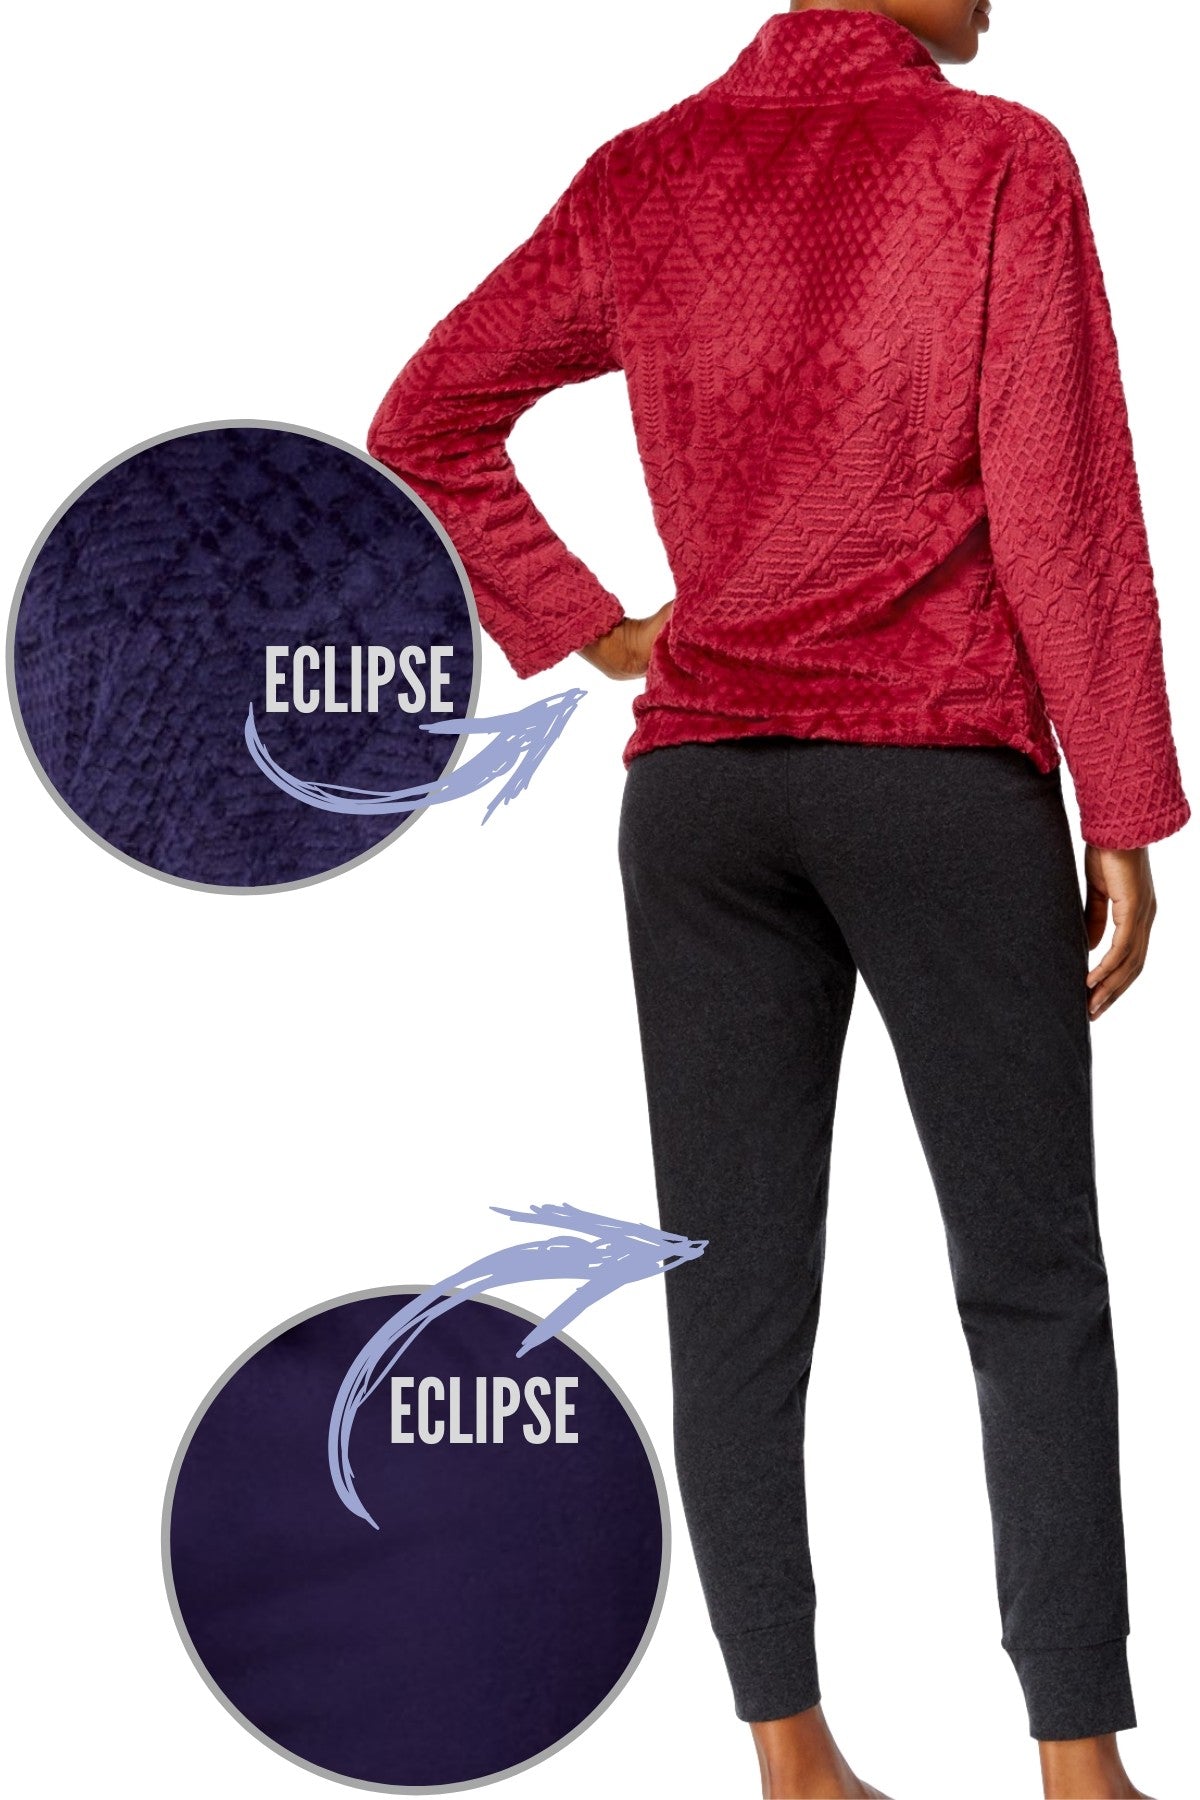 Nautica Eclipse Plush/Textured Lounge Top and Jogger Pant Set